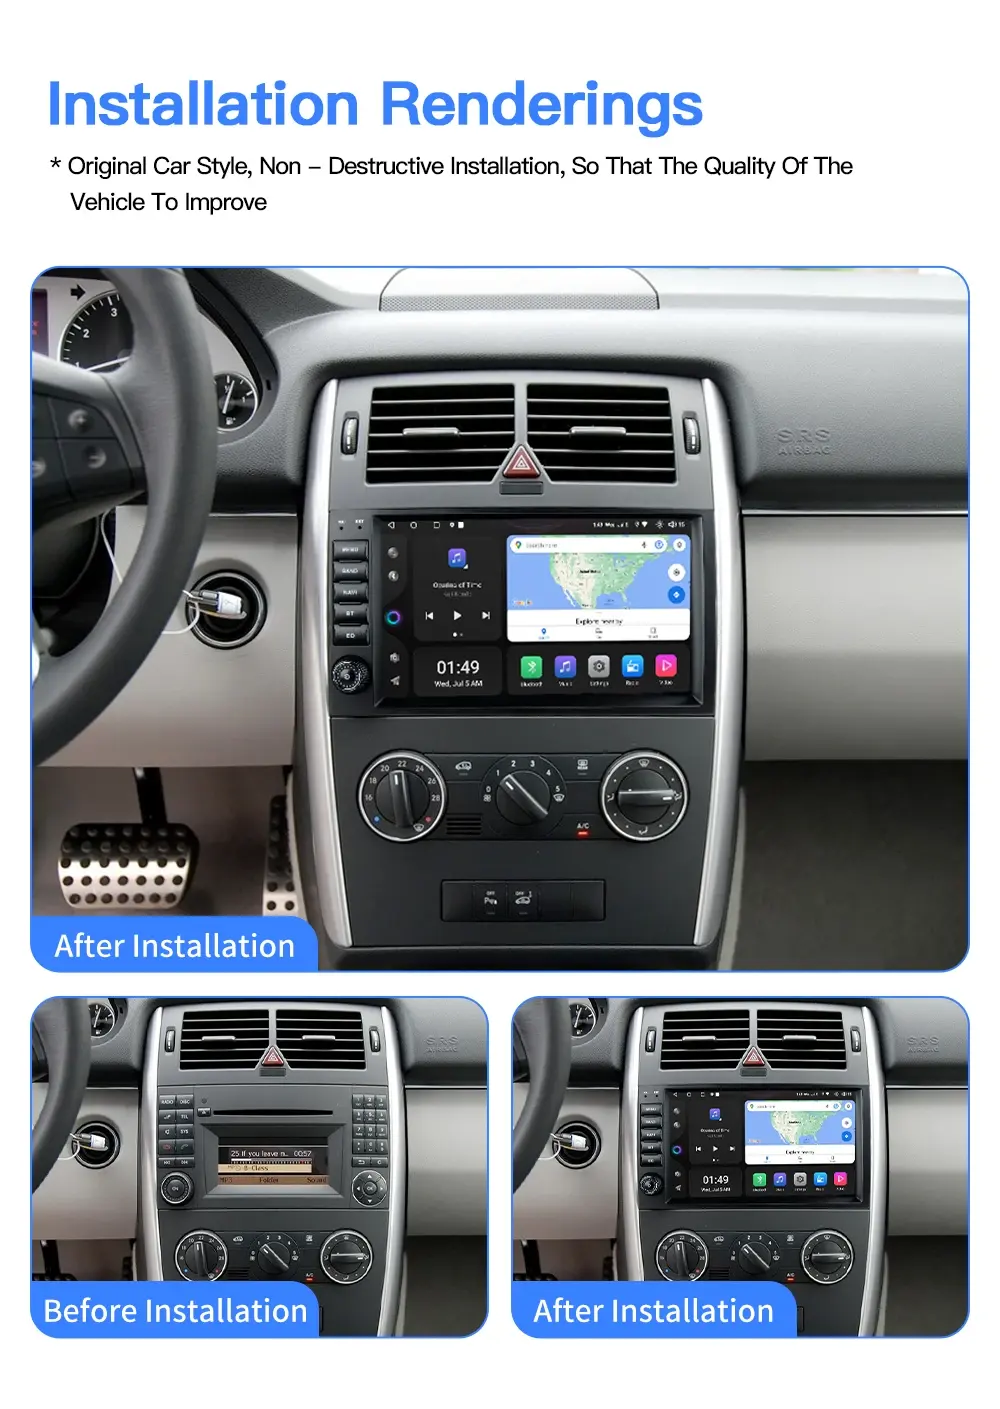 BQCC DAB CarPlay Radio Stereo Mirrorlink 7-inch Autoradio 1+32GB/2+32GB/2+64GB GPS Wifi RDS For Mercedes Bens B200 2008-2017